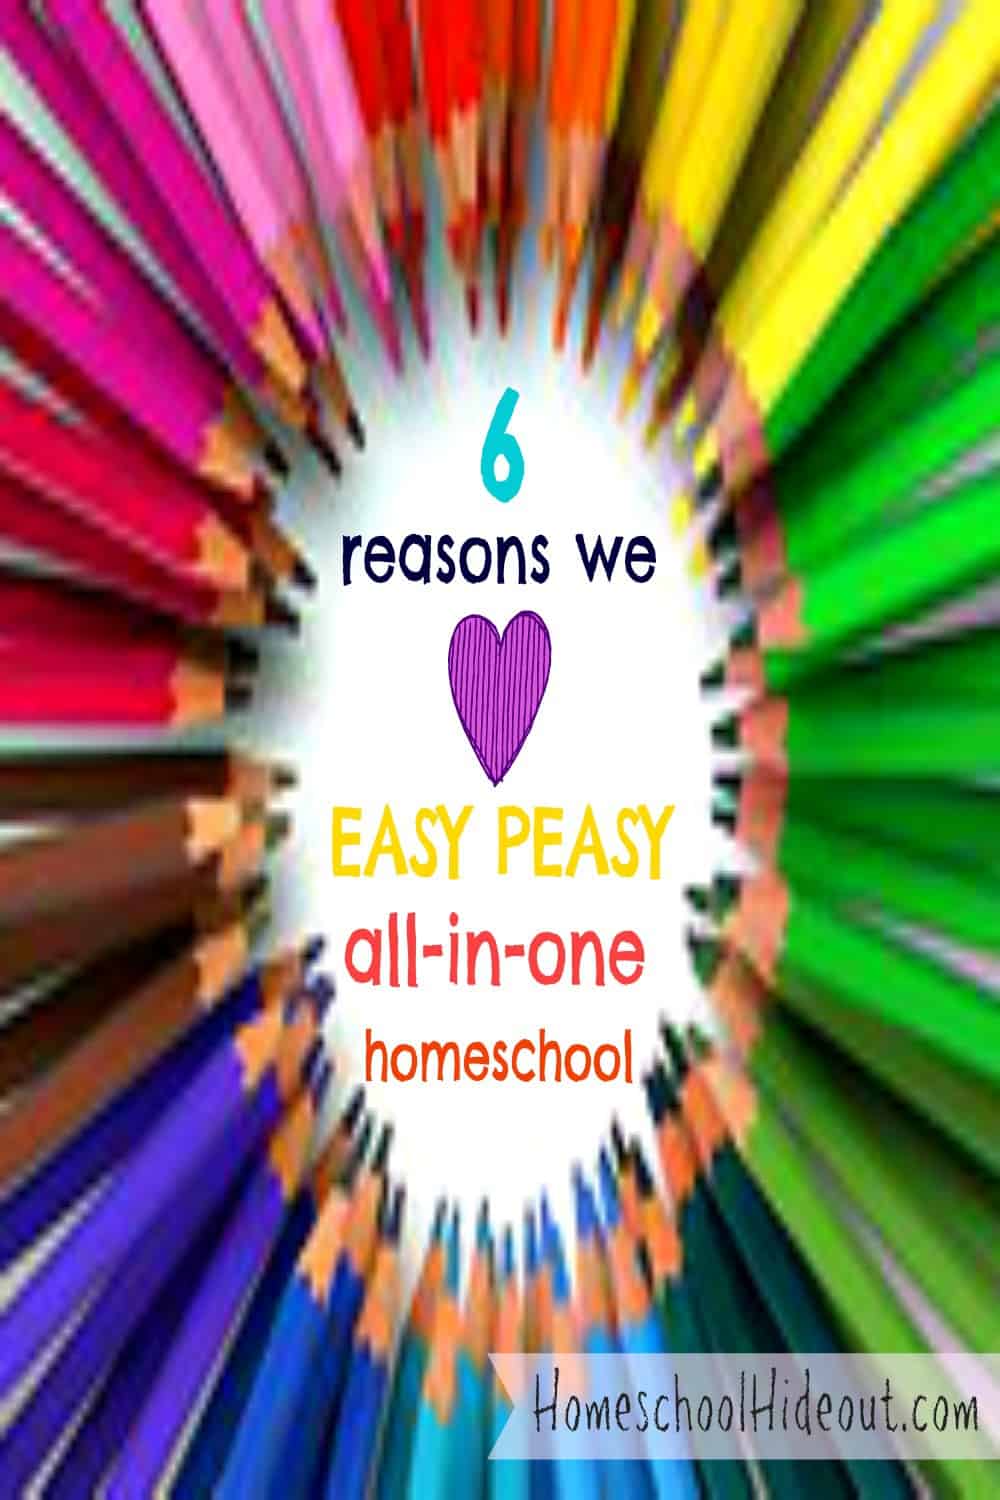 Easy Peasy's FREE homeschool Curriculum - Homeschool Hideout